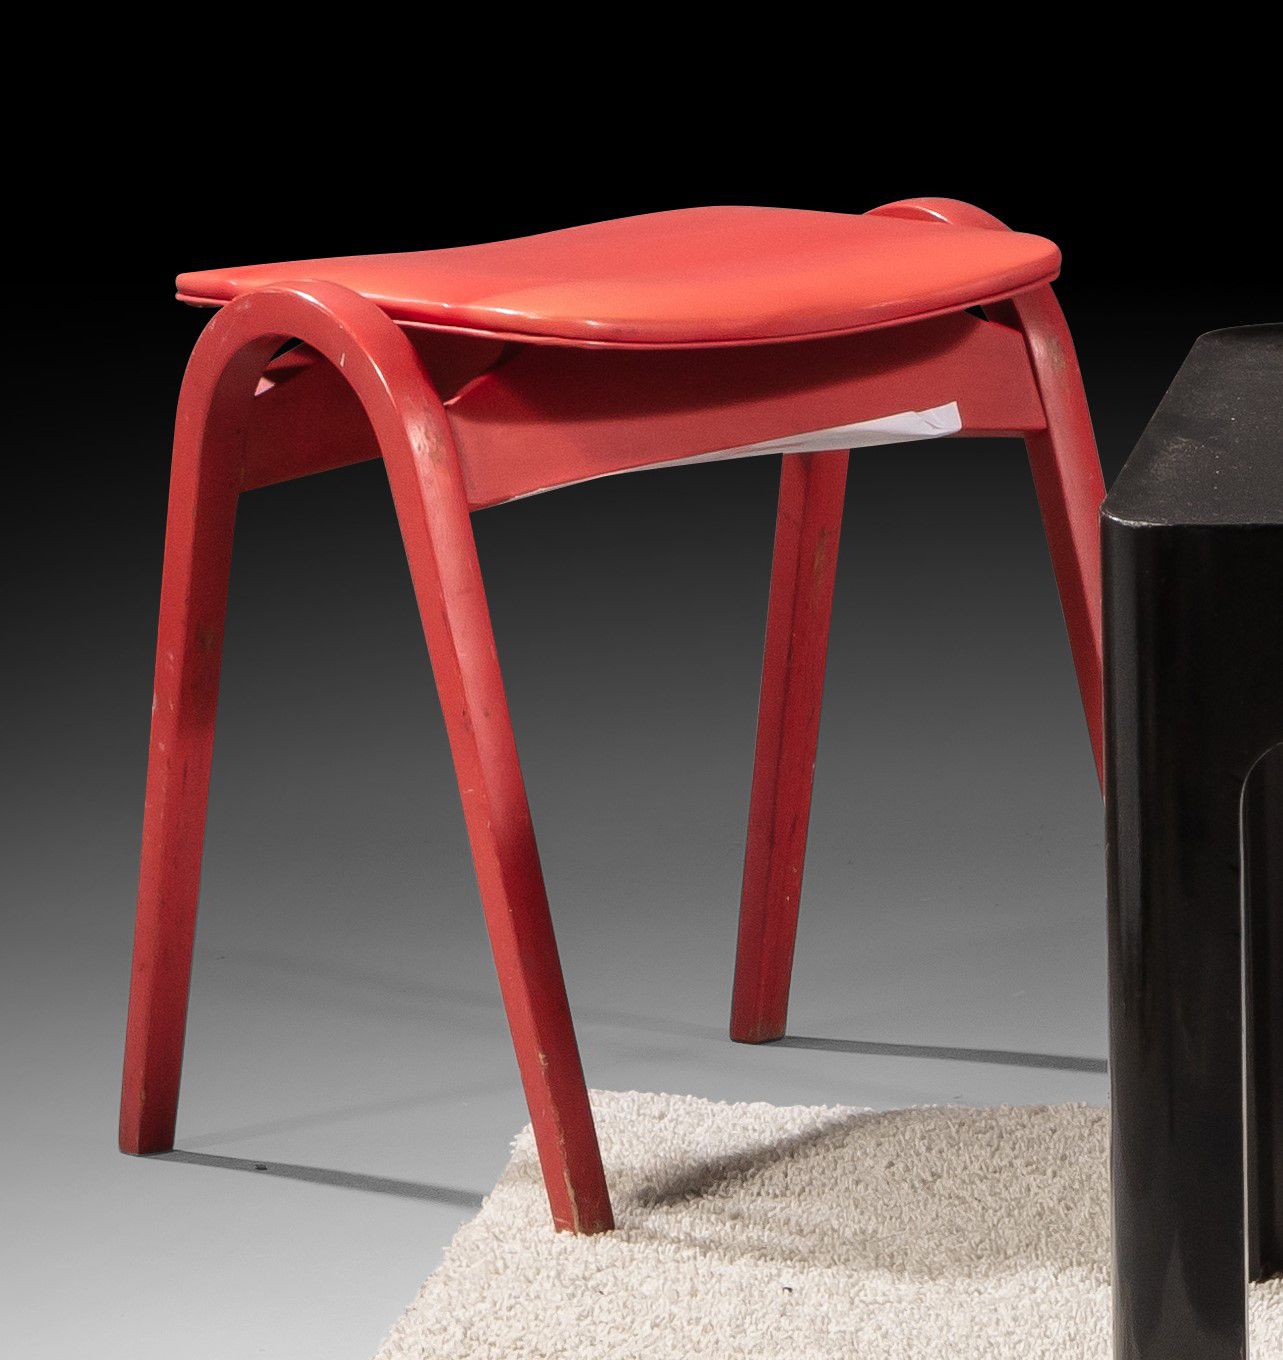 Isamu KENMOCHI et Akita MOKKO (éditeur) 两个木质和红黑仿皮凳子，1955 年设计
背面标签
H.45 厘米 - 40 厘&hellip;